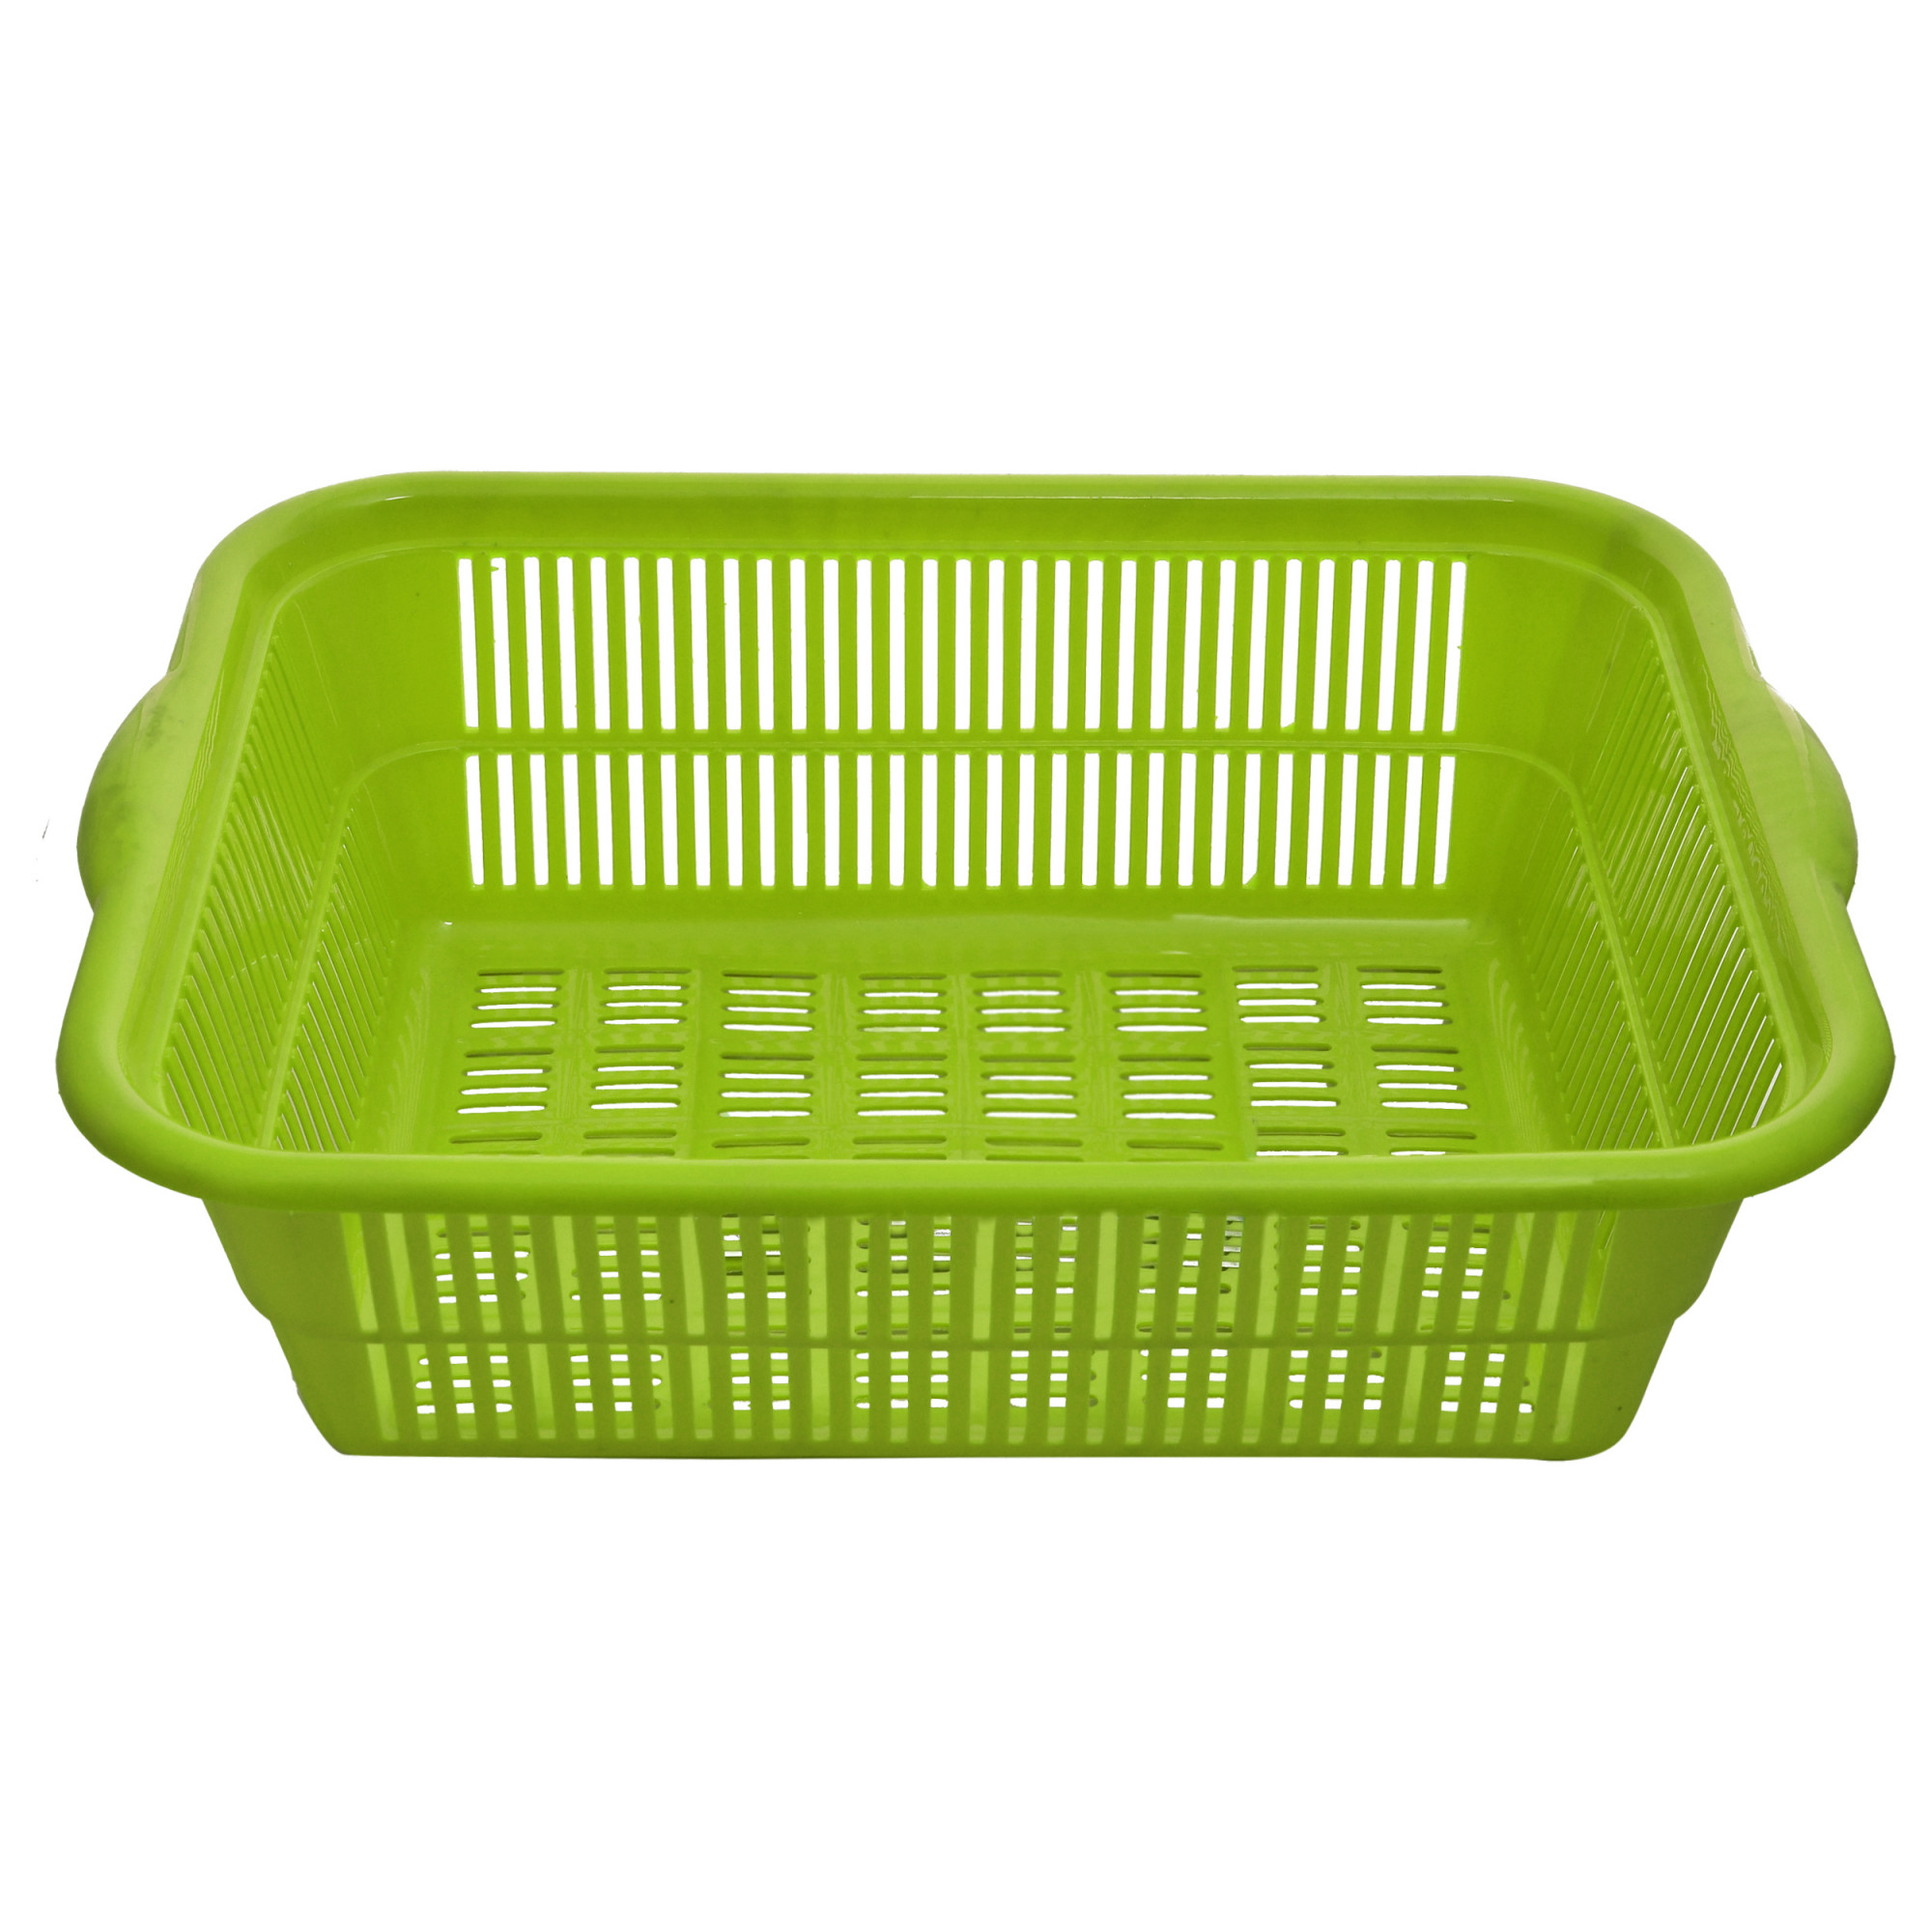 Kuber Industries Plastic Kitchen Small Size Dish Rack Drainer Vegetables And Fruits Washing Basket Dish Rack Multipurpose Organizers (Green & Yellow)-KUBMART610